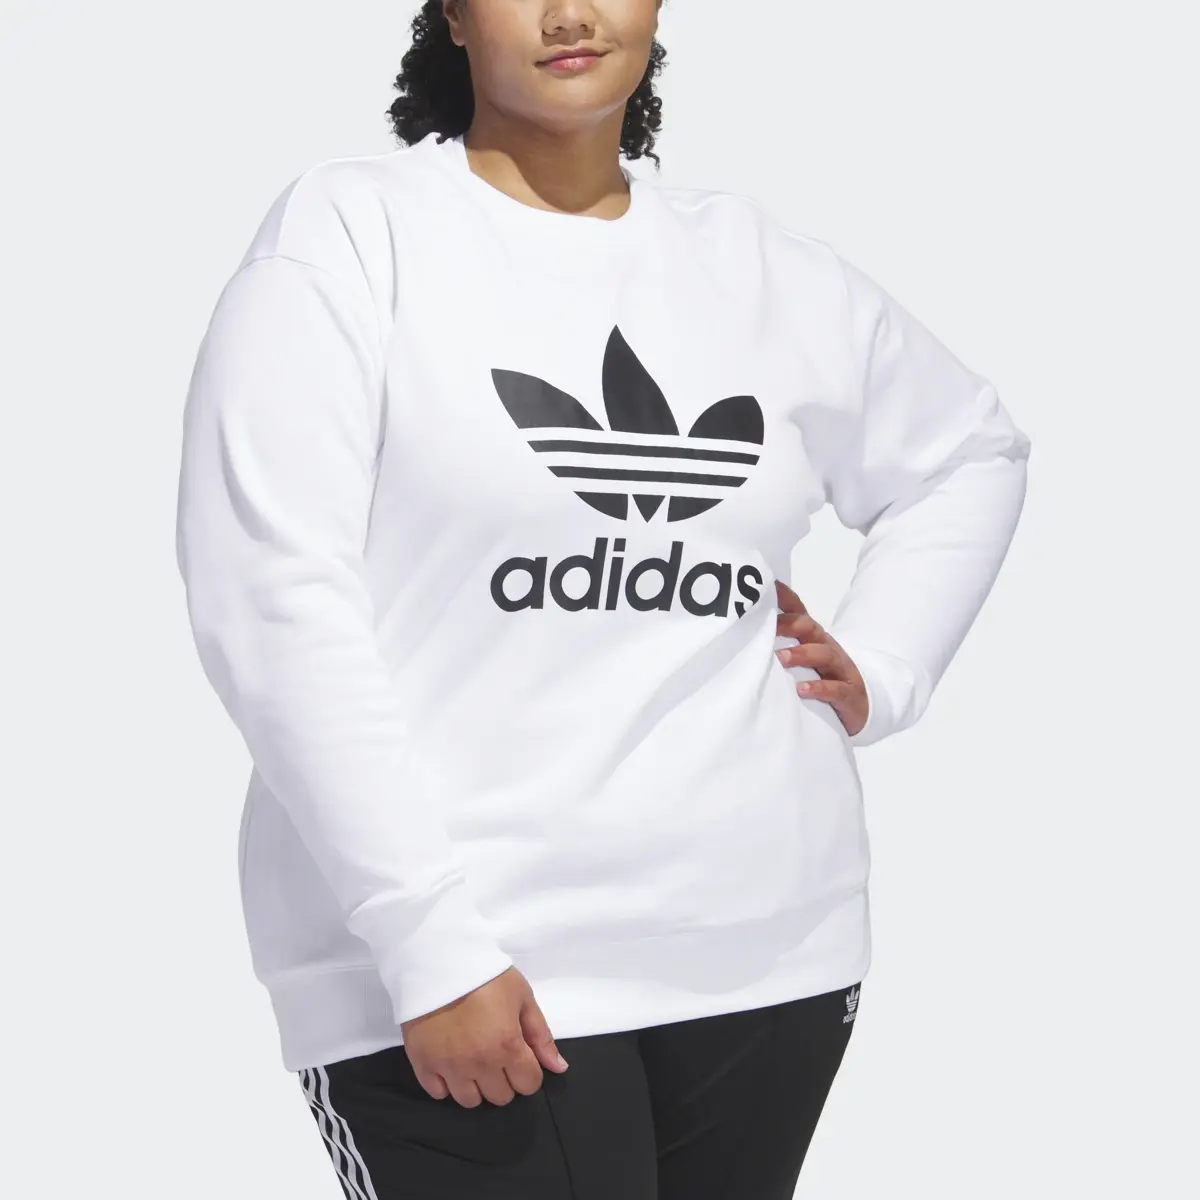 Adidas Trefoil Crew Sweatshirt (Plus Size). 1